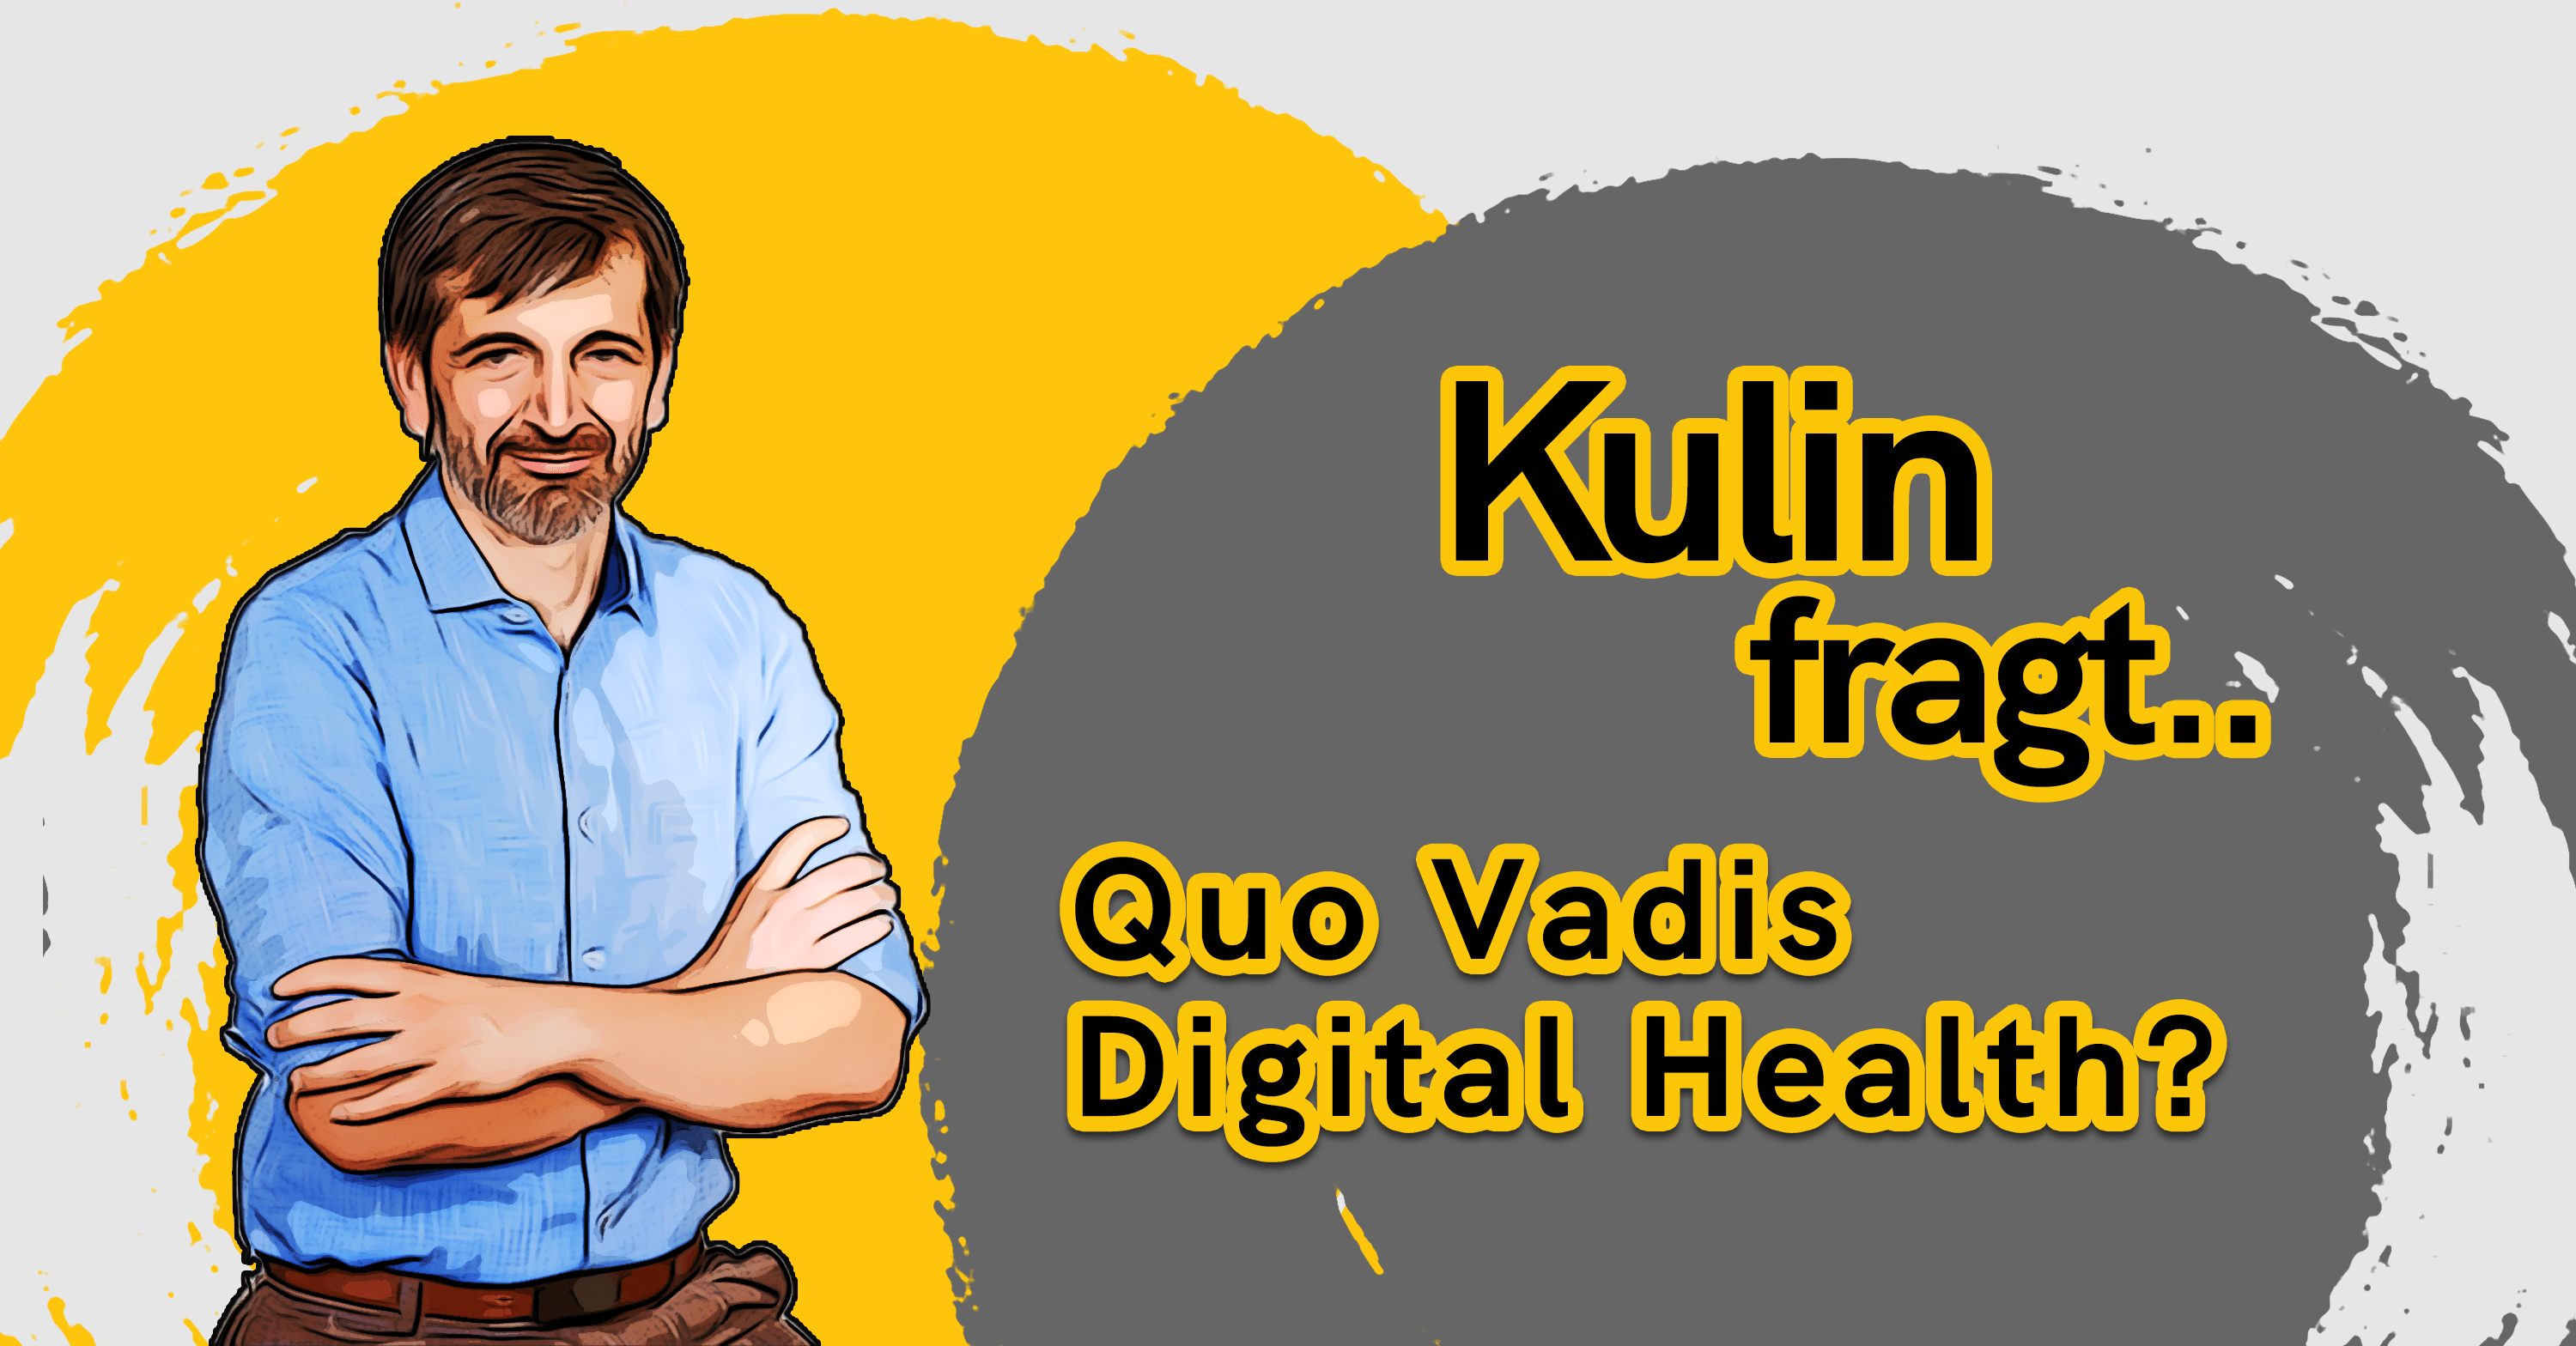 Admir Kulin fragt...Quo Vadis Digital Health?